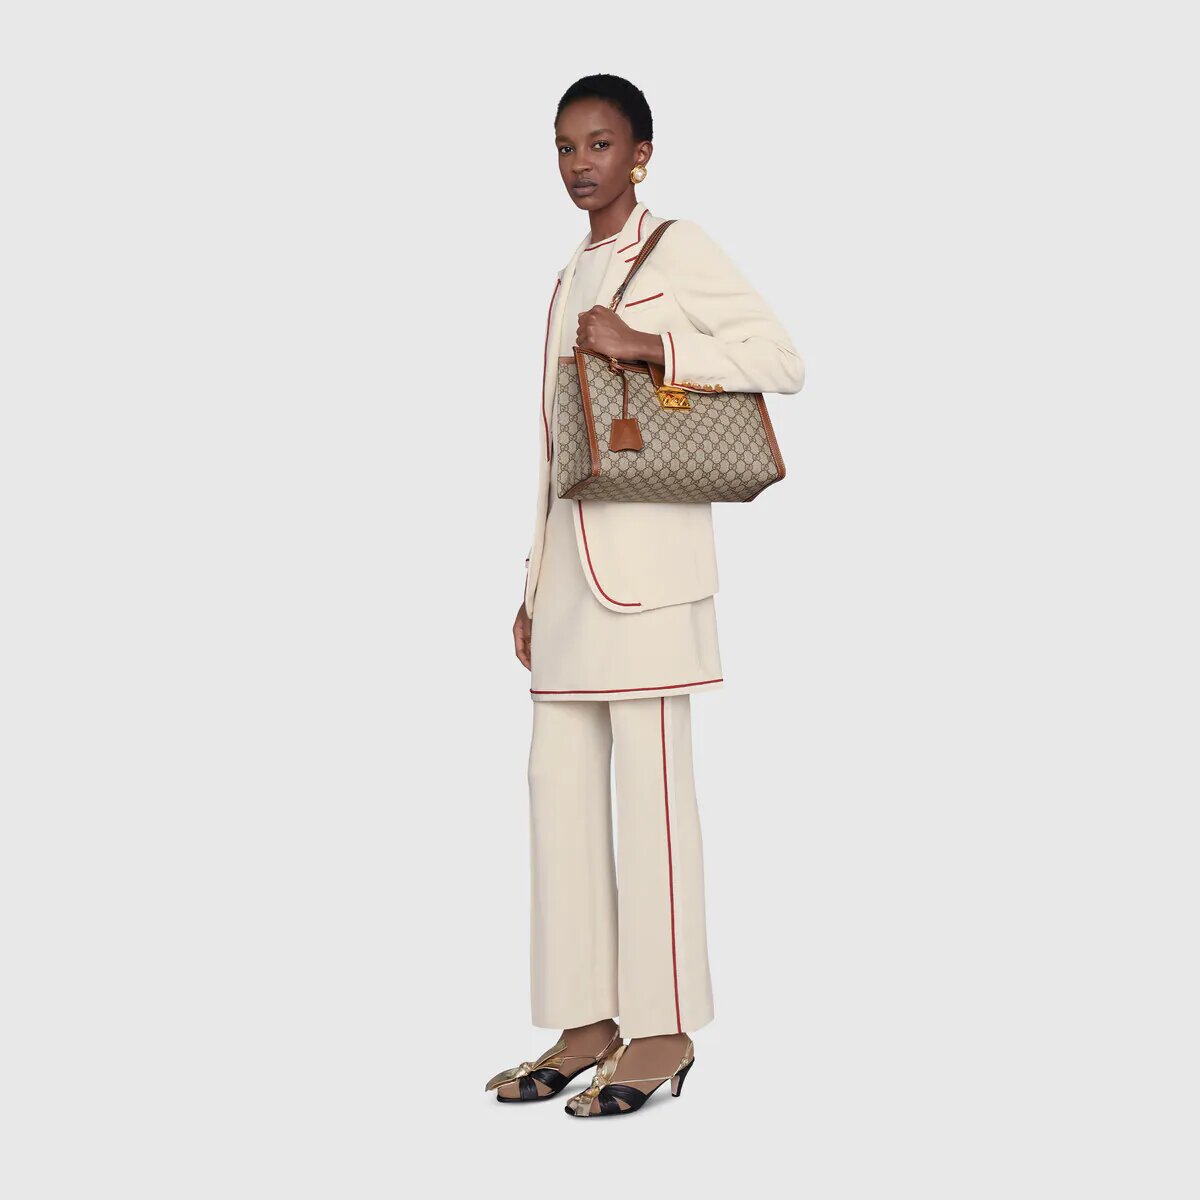 Gucci® Padlock GG Medium Shoulder Bag